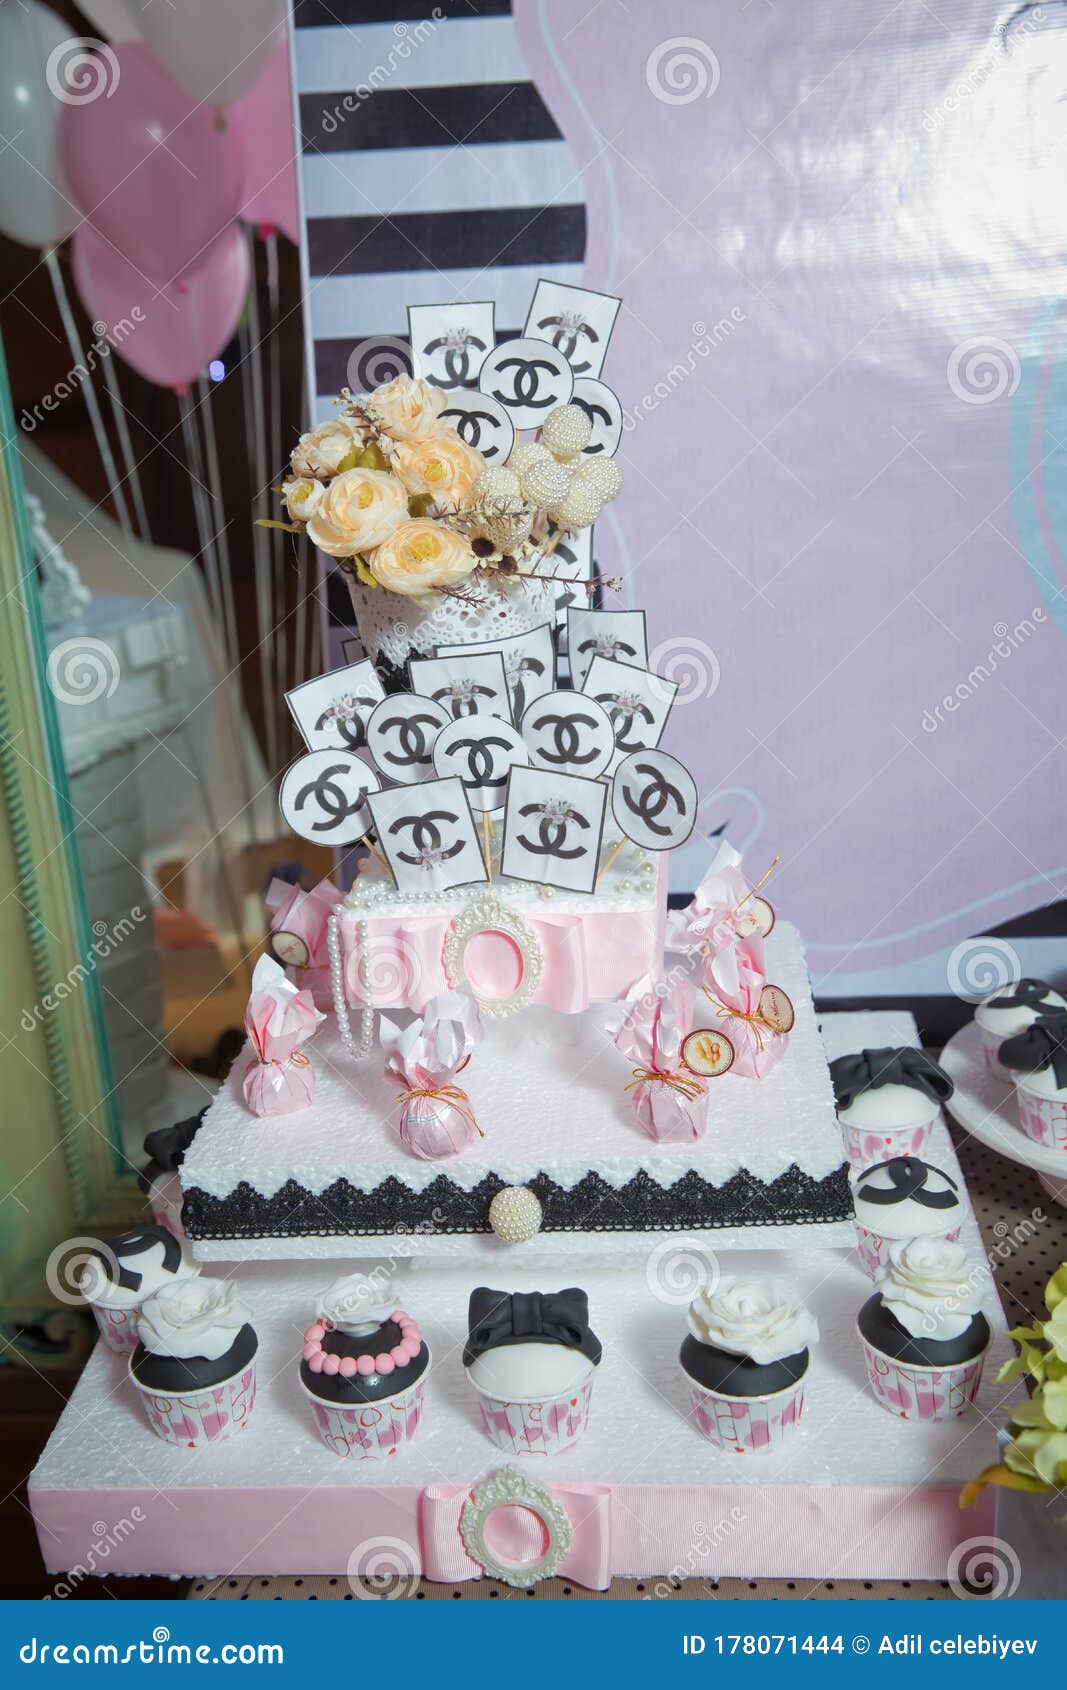 chanel theme customized cake smash candy bar birthday party baku azerbaijan pink pearls 178071444